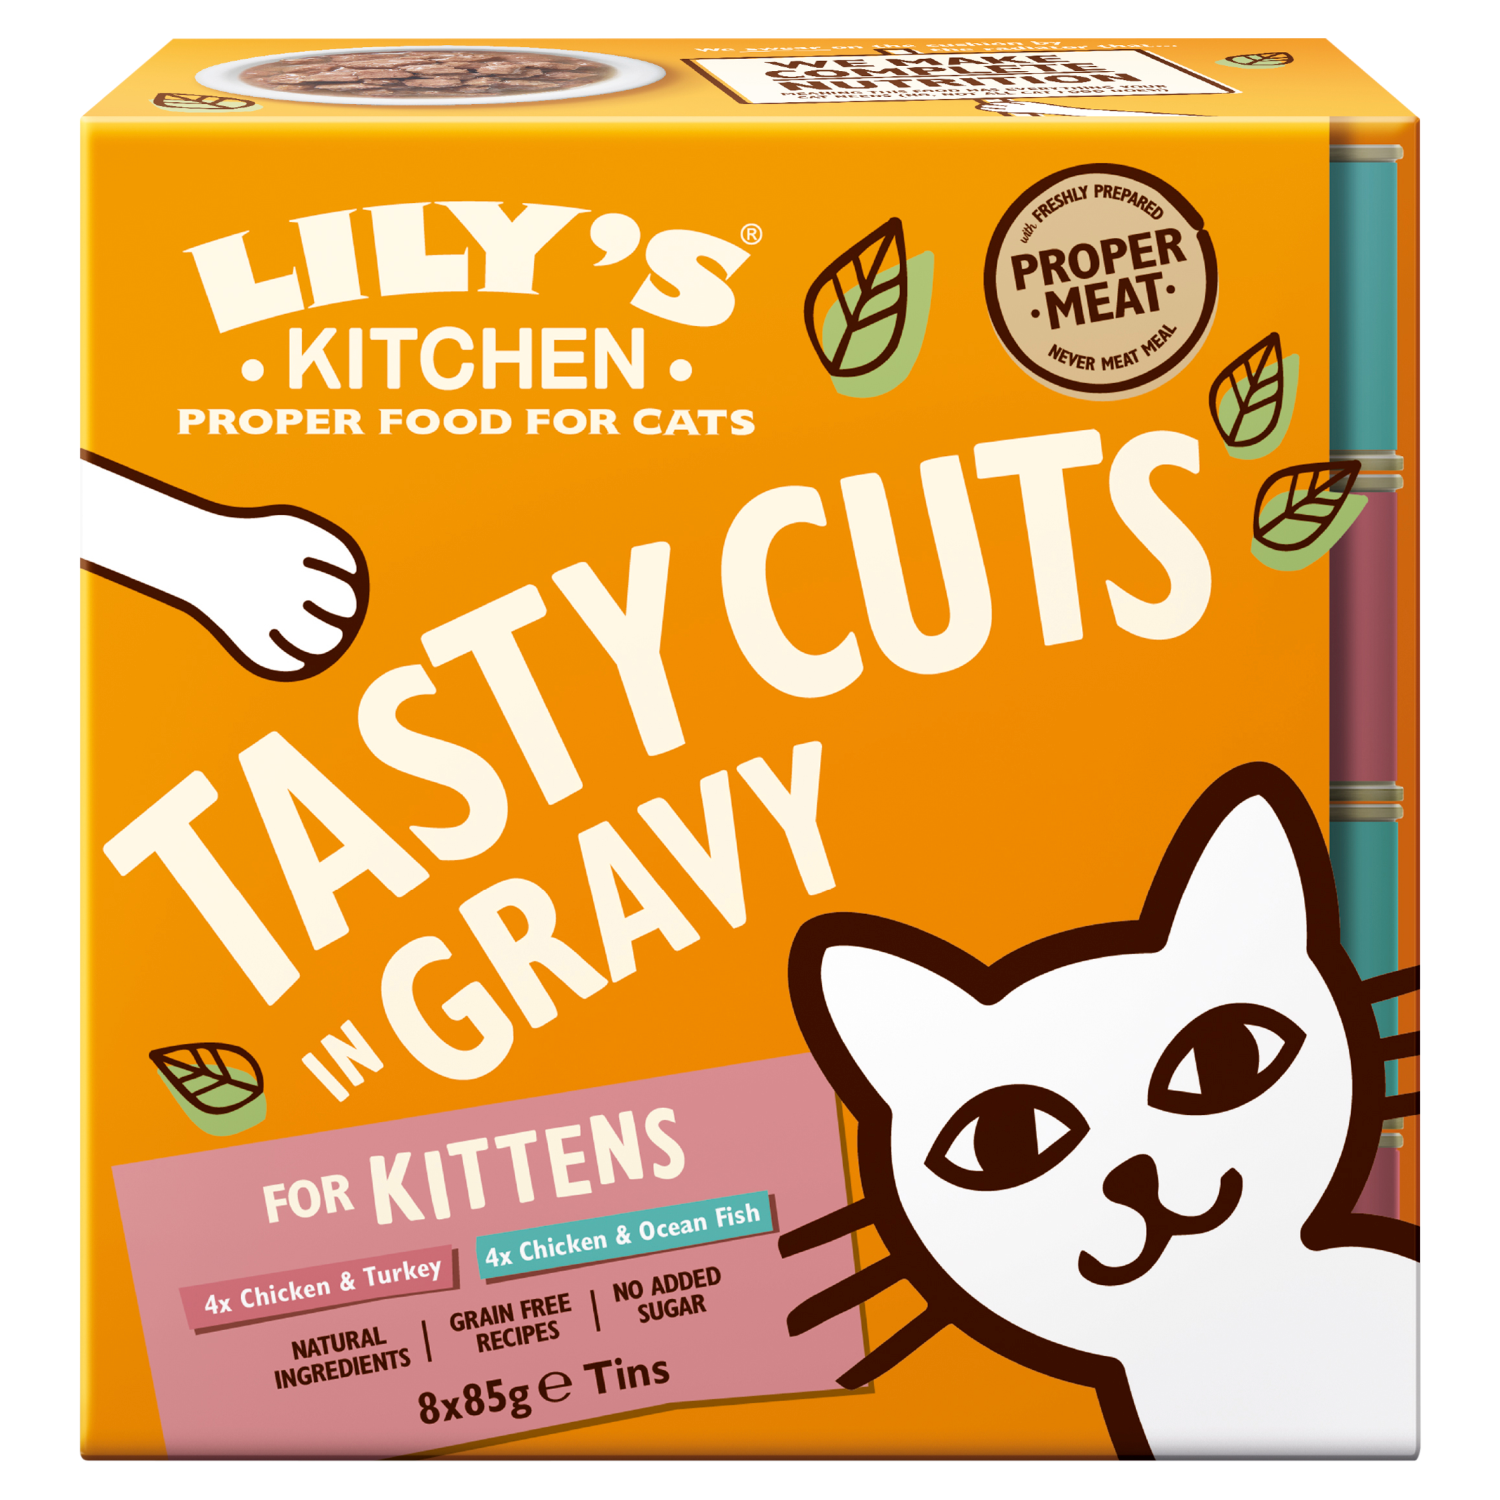 Lilys Kitchen Tasty Cuts in Gravy 8 x 85g Multipack